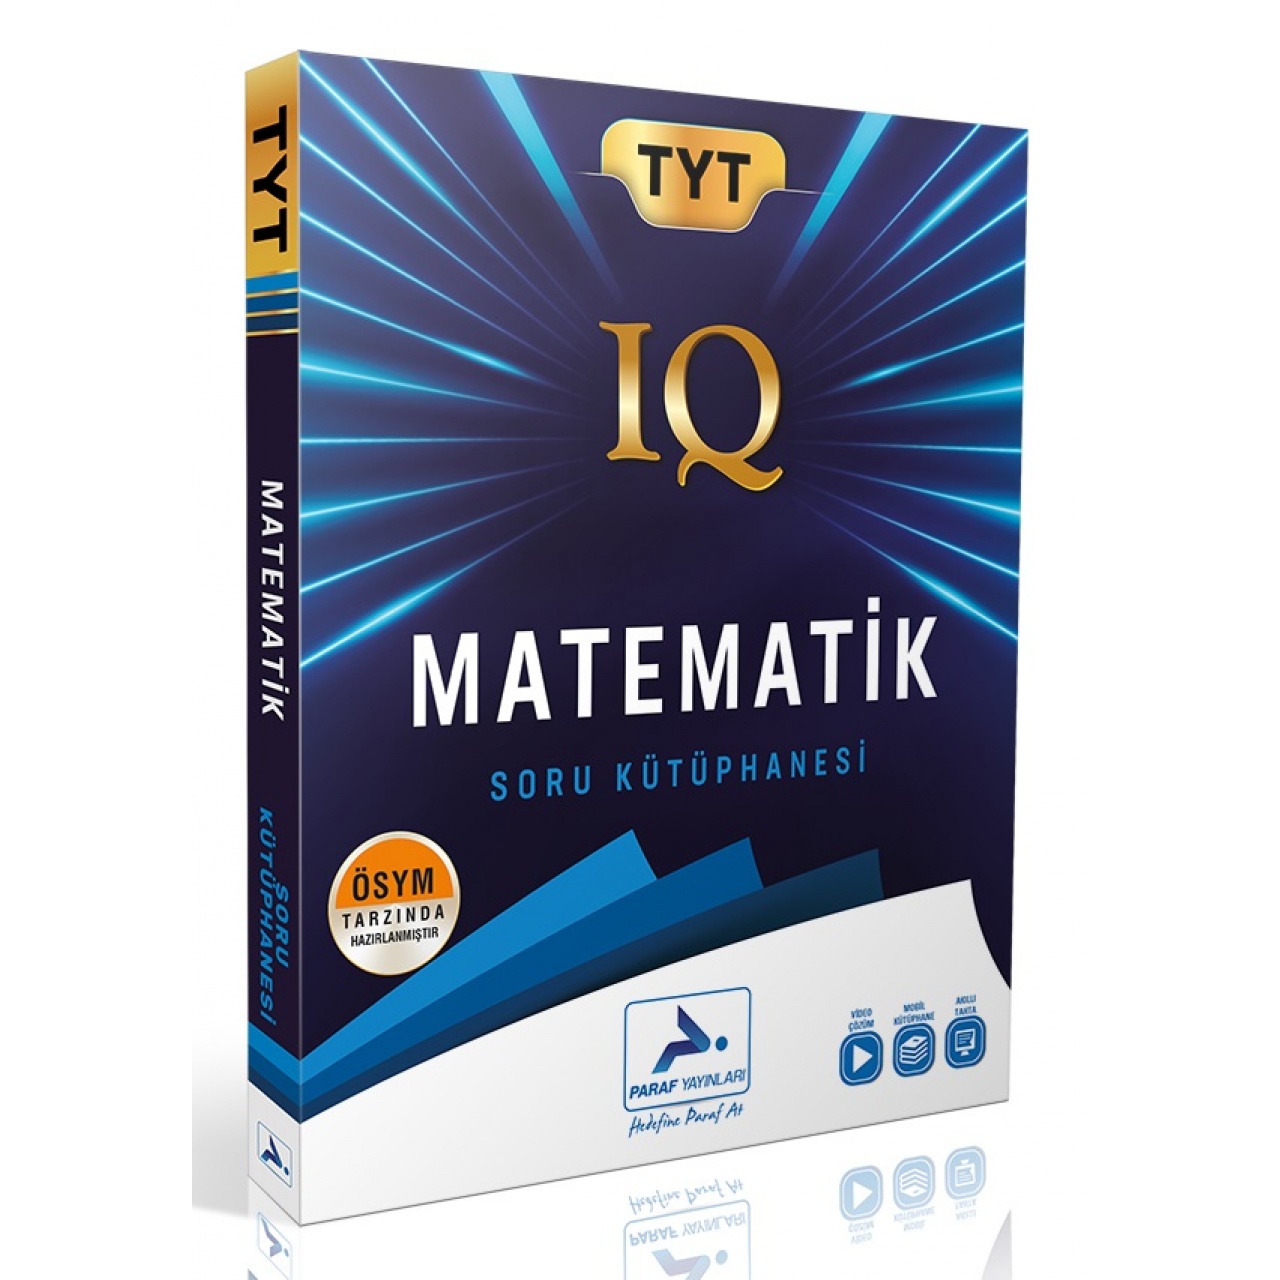 TYT IQ Matematik Soru Kütüphanesi Paraf Yayınları